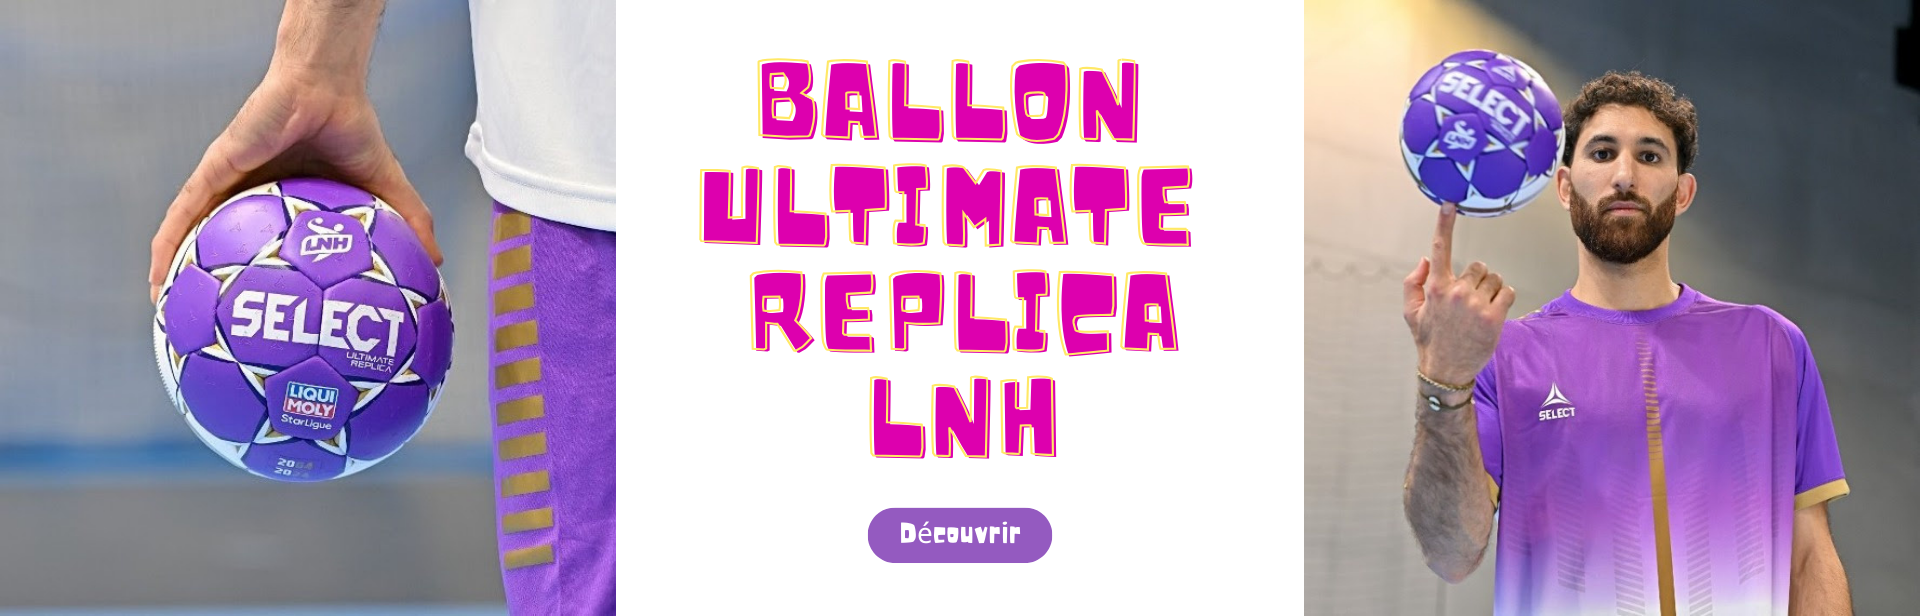 Ballon select ultimate replica